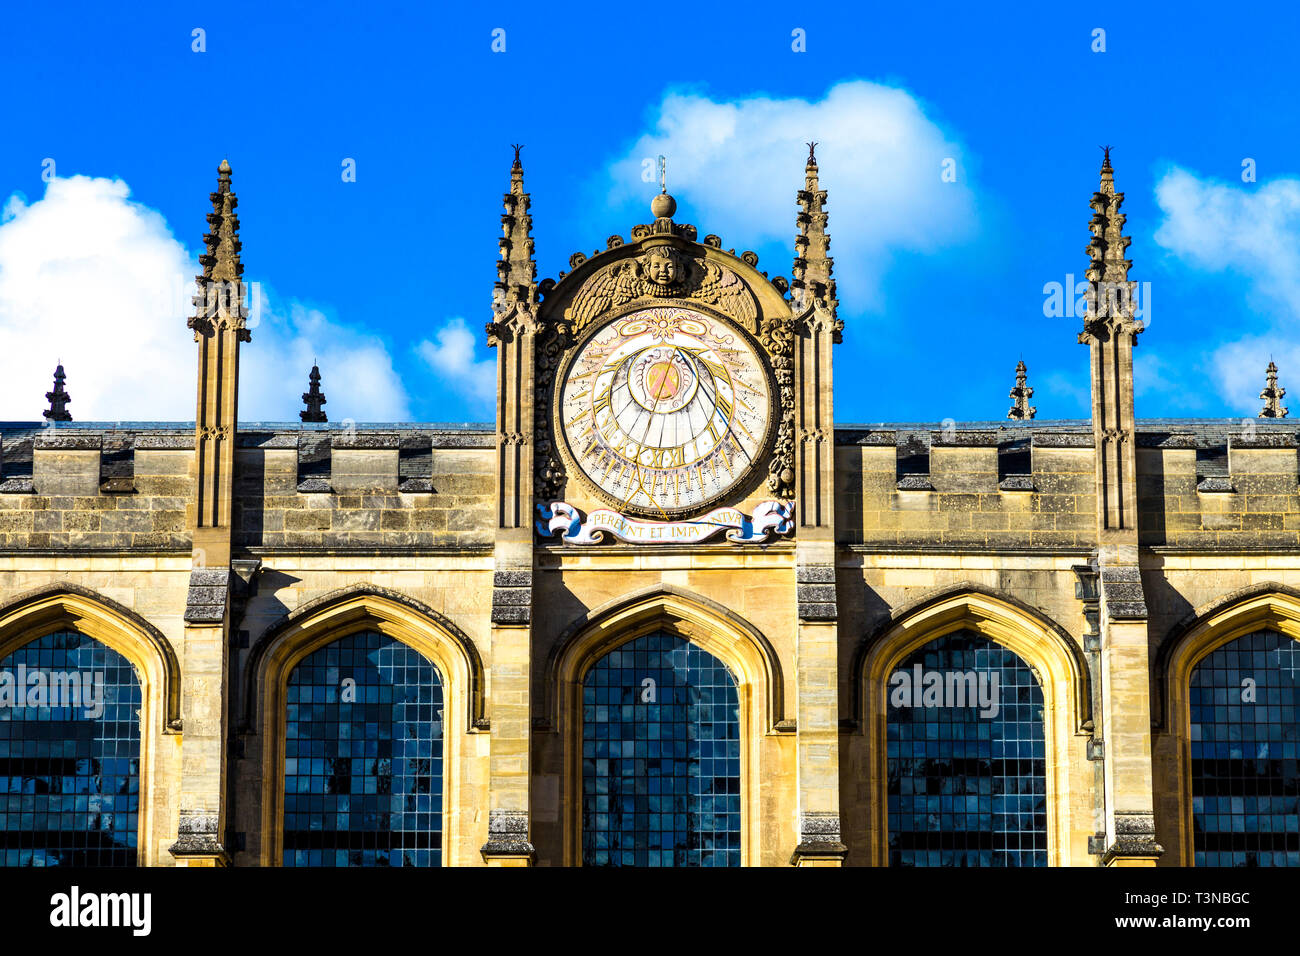 Close-up de la façade et de l'horloge astronomique de bibliothèque Codrington, All Souls College, Oxford, UK Banque D'Images